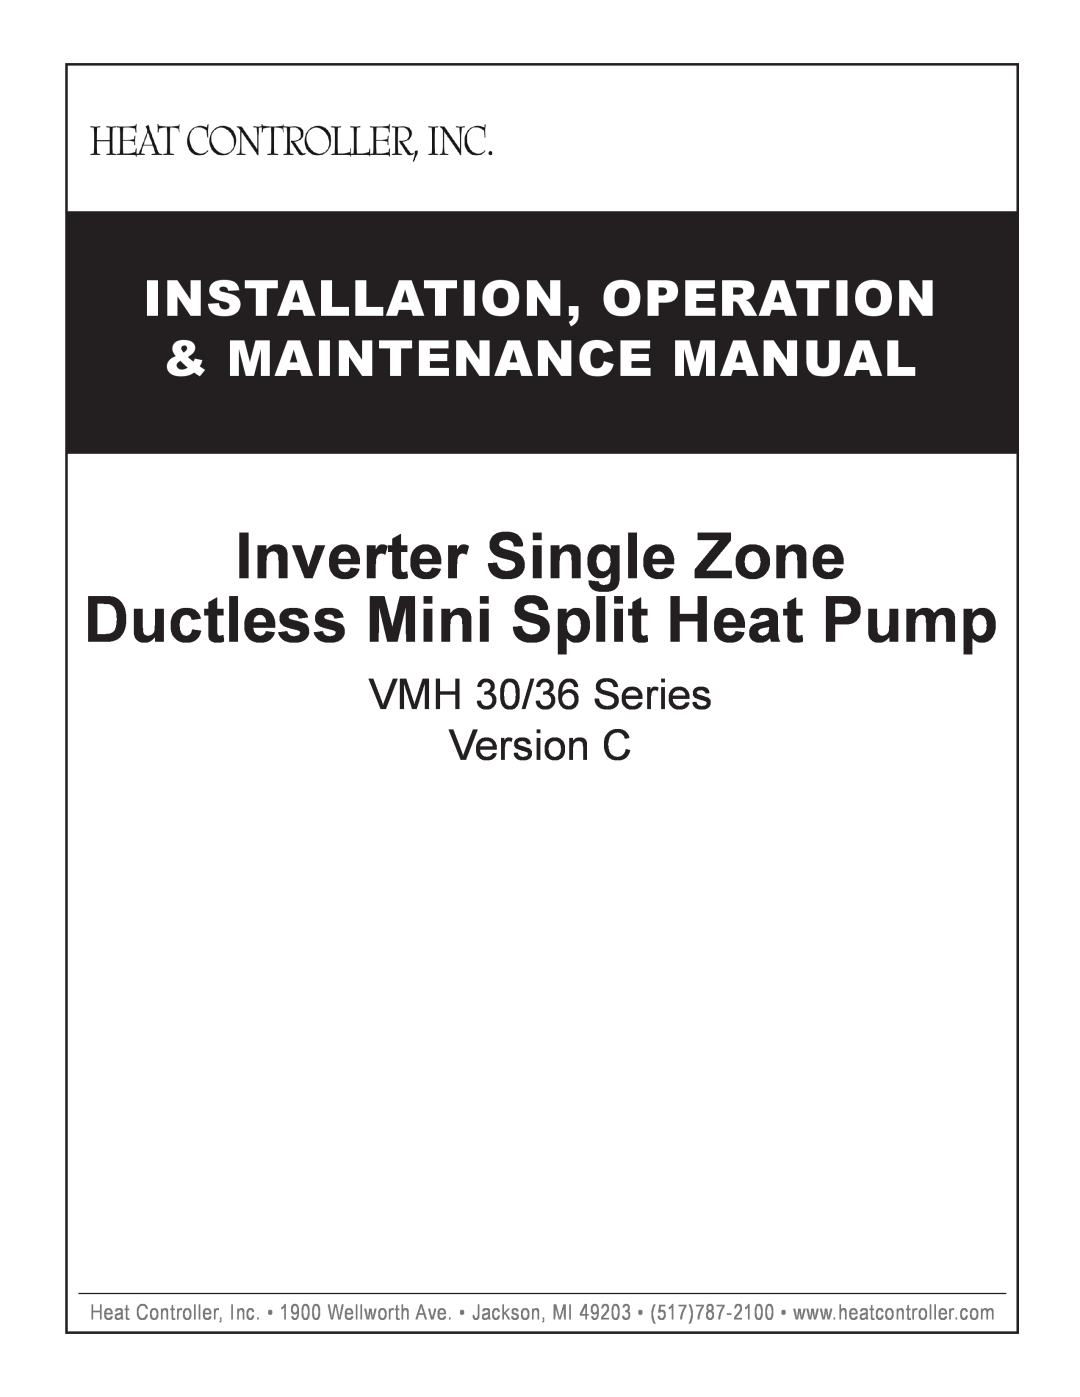 Heat Controller manual Inverter Single Zone, Ductless Mini Split Heat Pump, VMH 30/36 Series Version C 